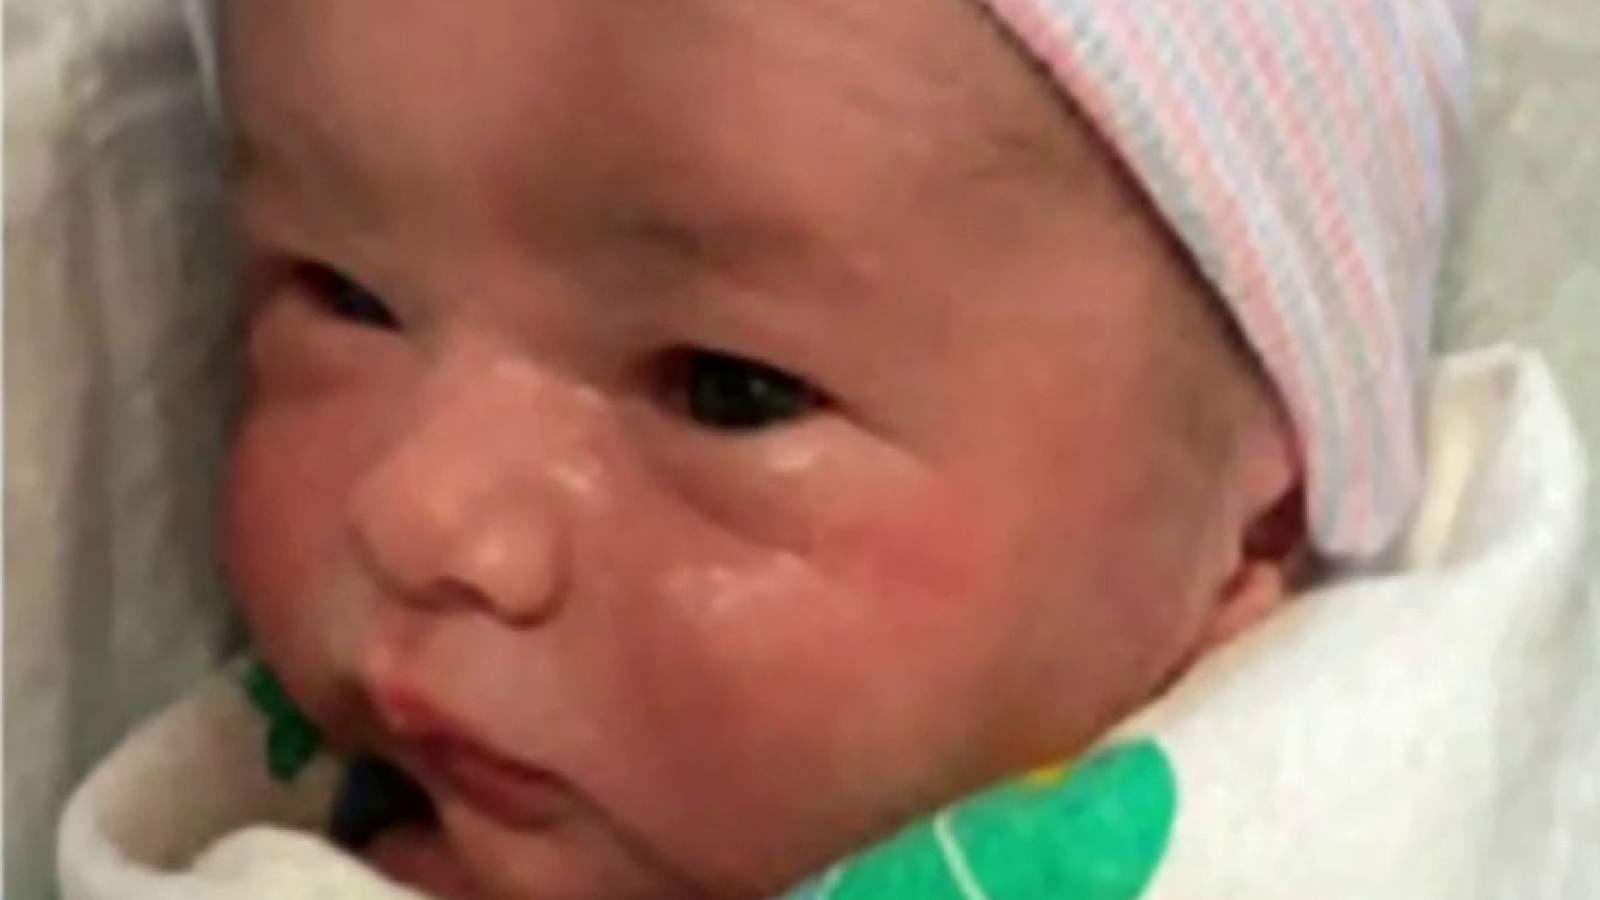 Newborn at center of Amber Alert still missing after man found dead in Florida